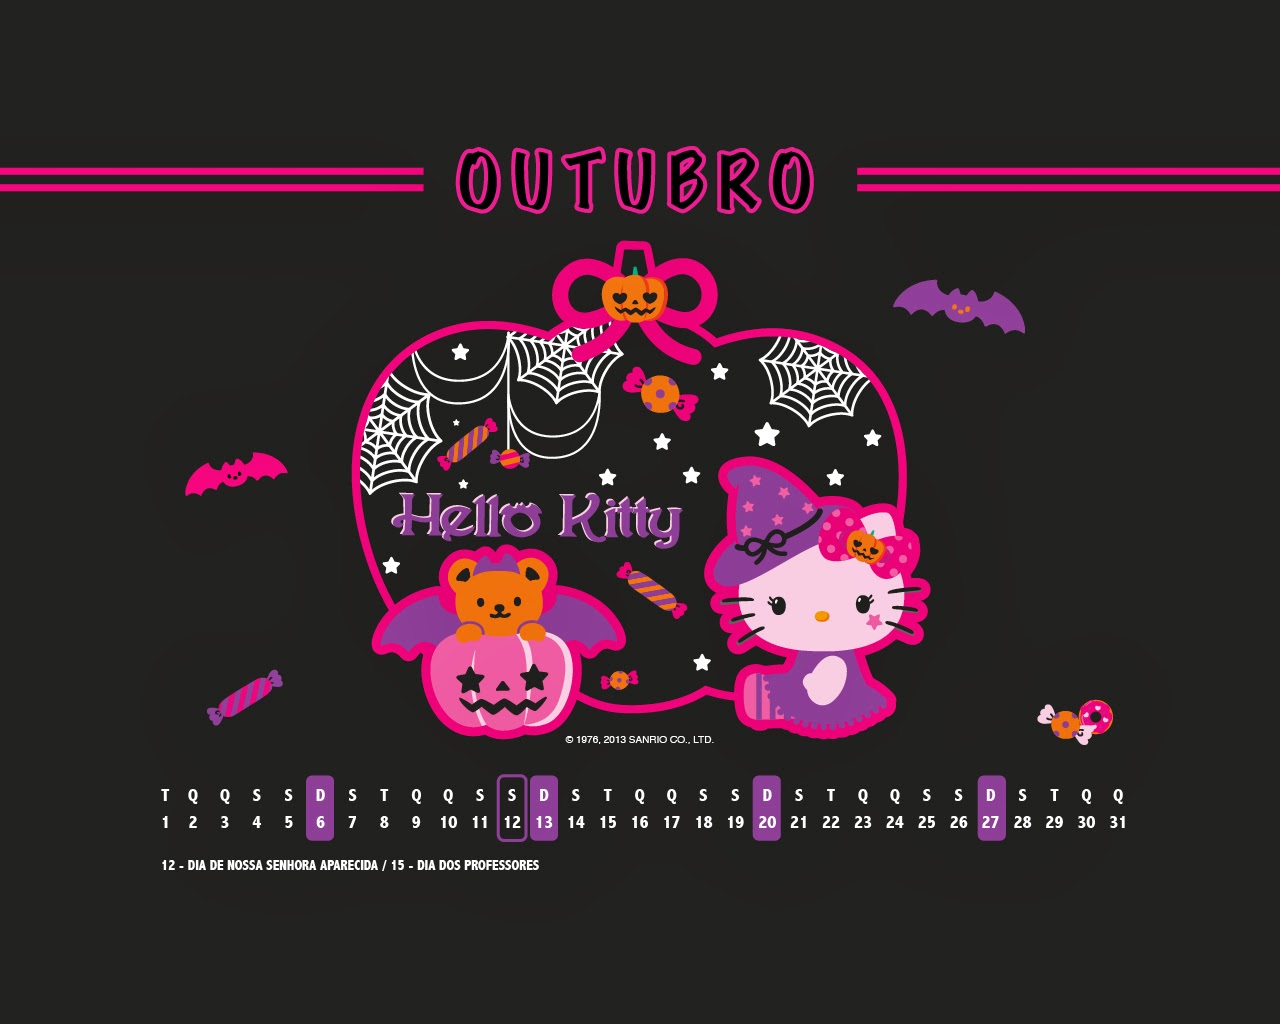 26+] Hello Kitty 4k Wallpapers